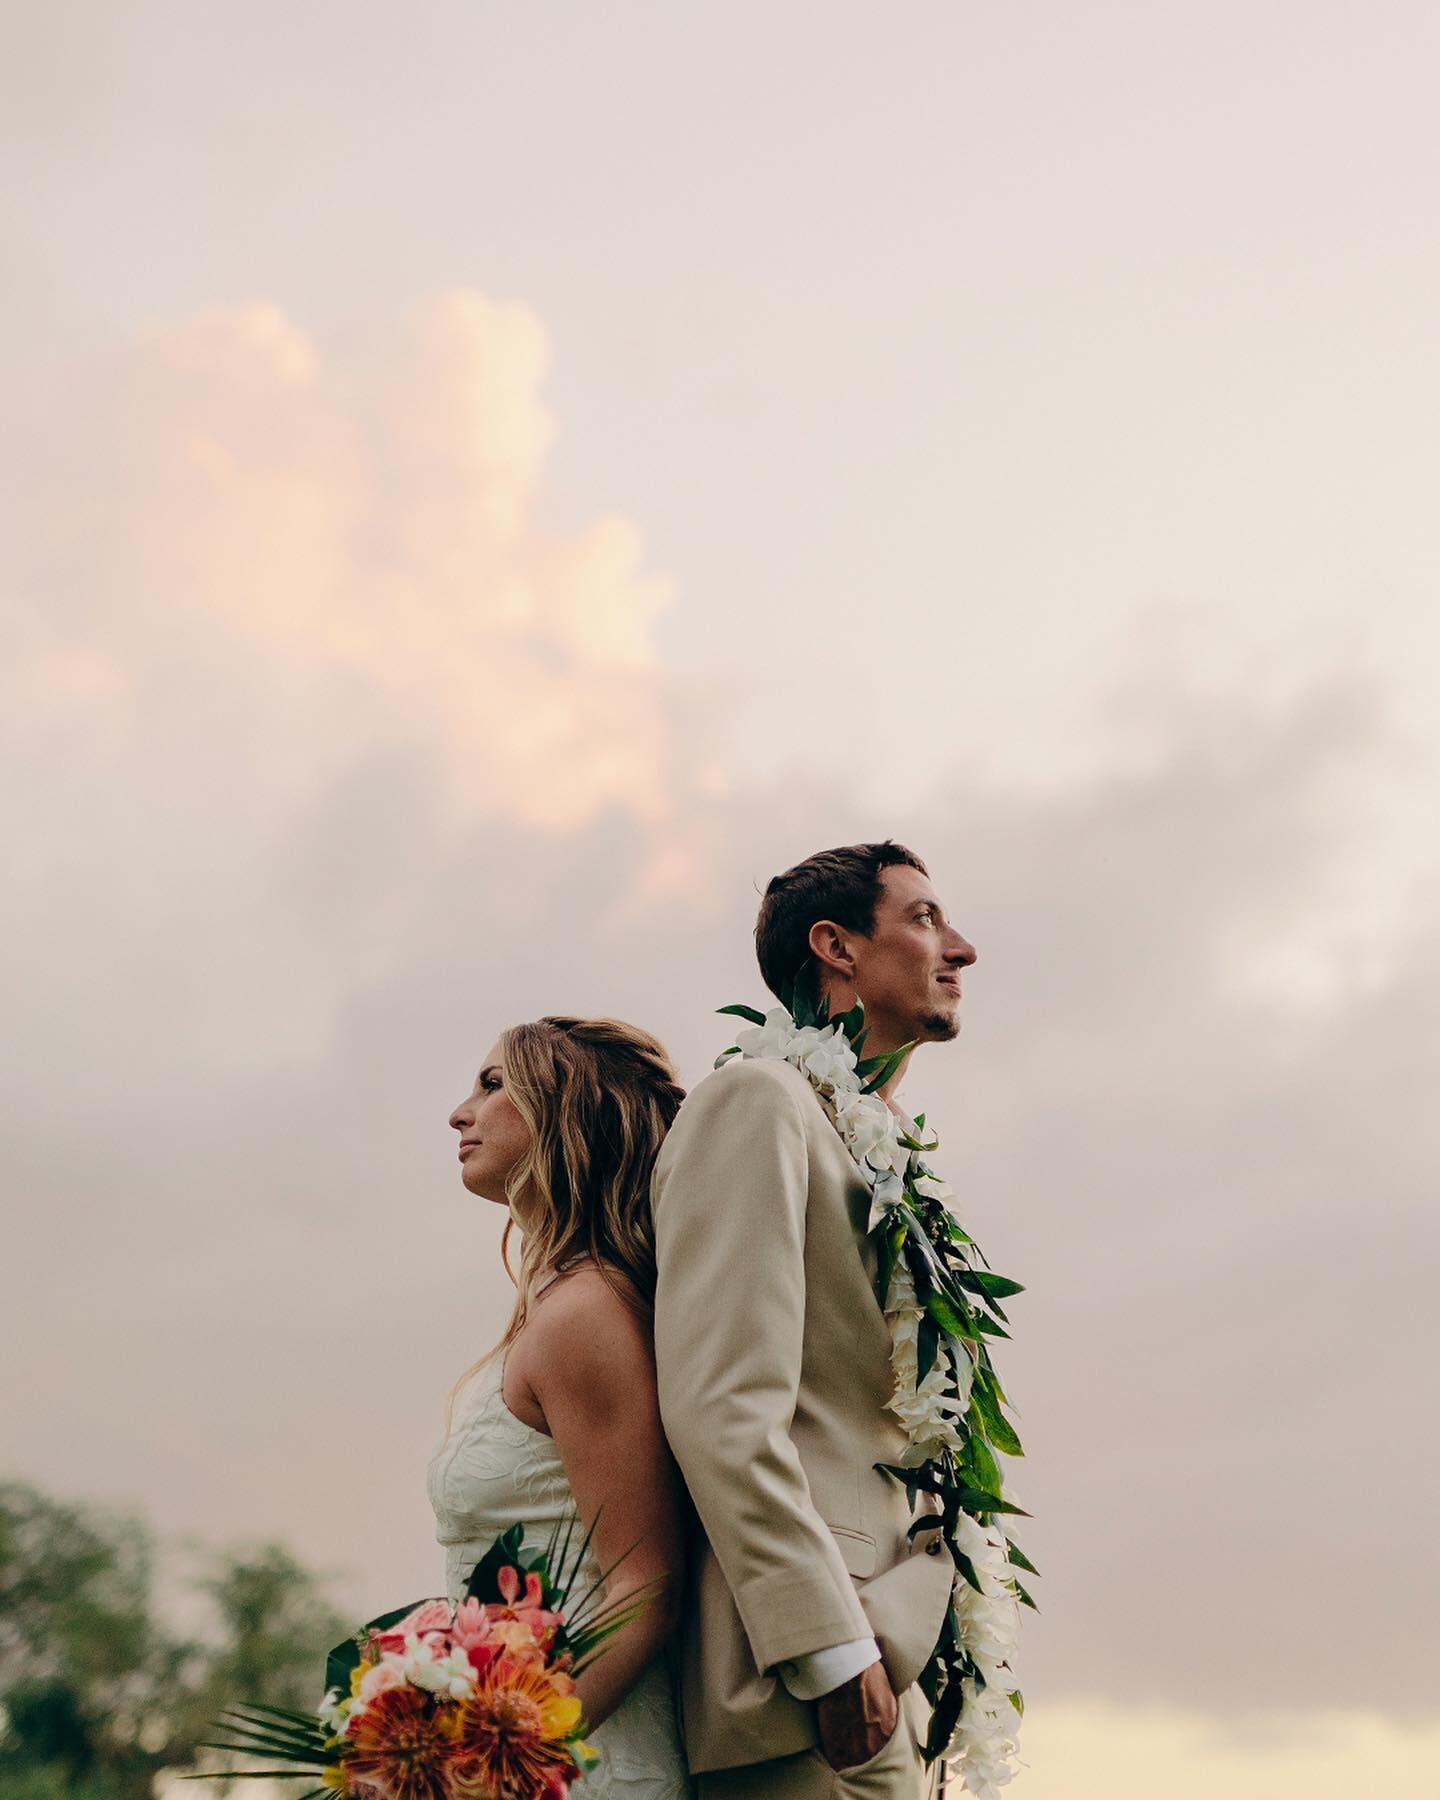 Elle + Cody 💕
.
.
.
.
.
.
#destinationweddingonmaui #weddinginhawaii
#photographersonmaui #mauiweddingplanning
#mauiweddingphotographer #hawaiiweddingphotographer
#waileawedding #intimateweddingphotographer
#hawaiiwedding #mauielopement #hawaiiphoto